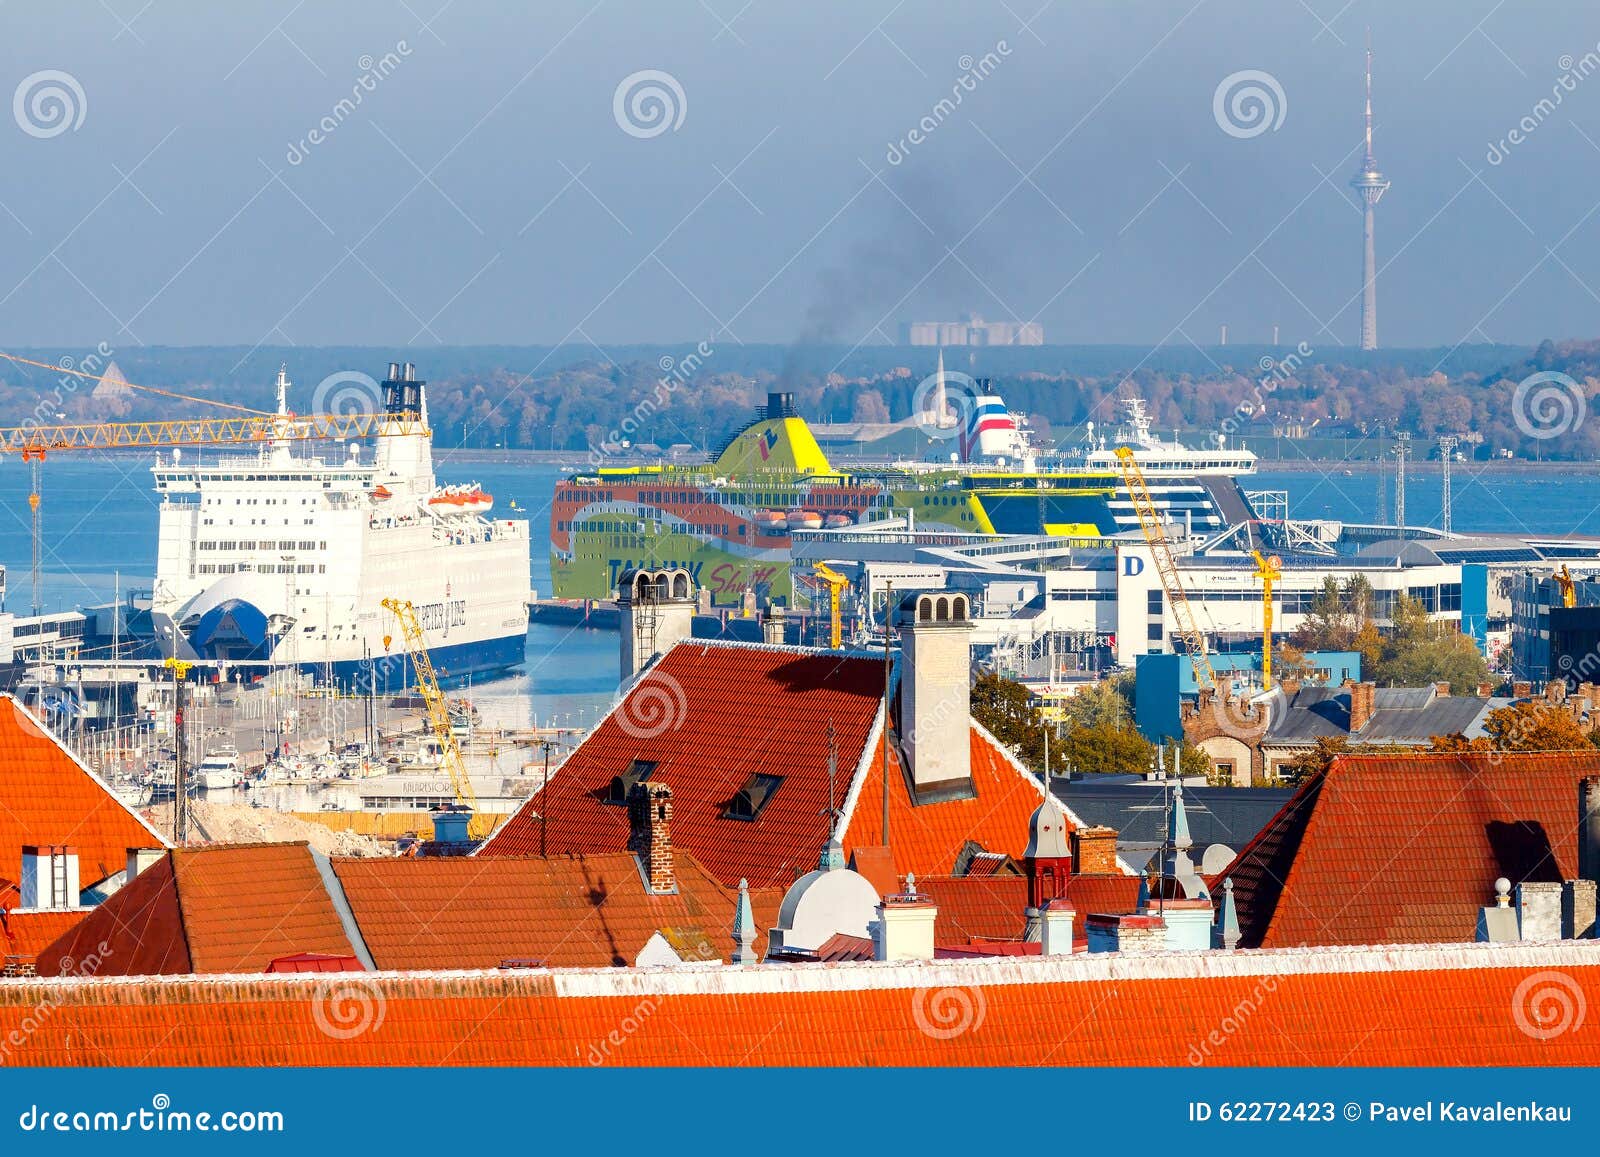 cruise ship port tallinn estonia